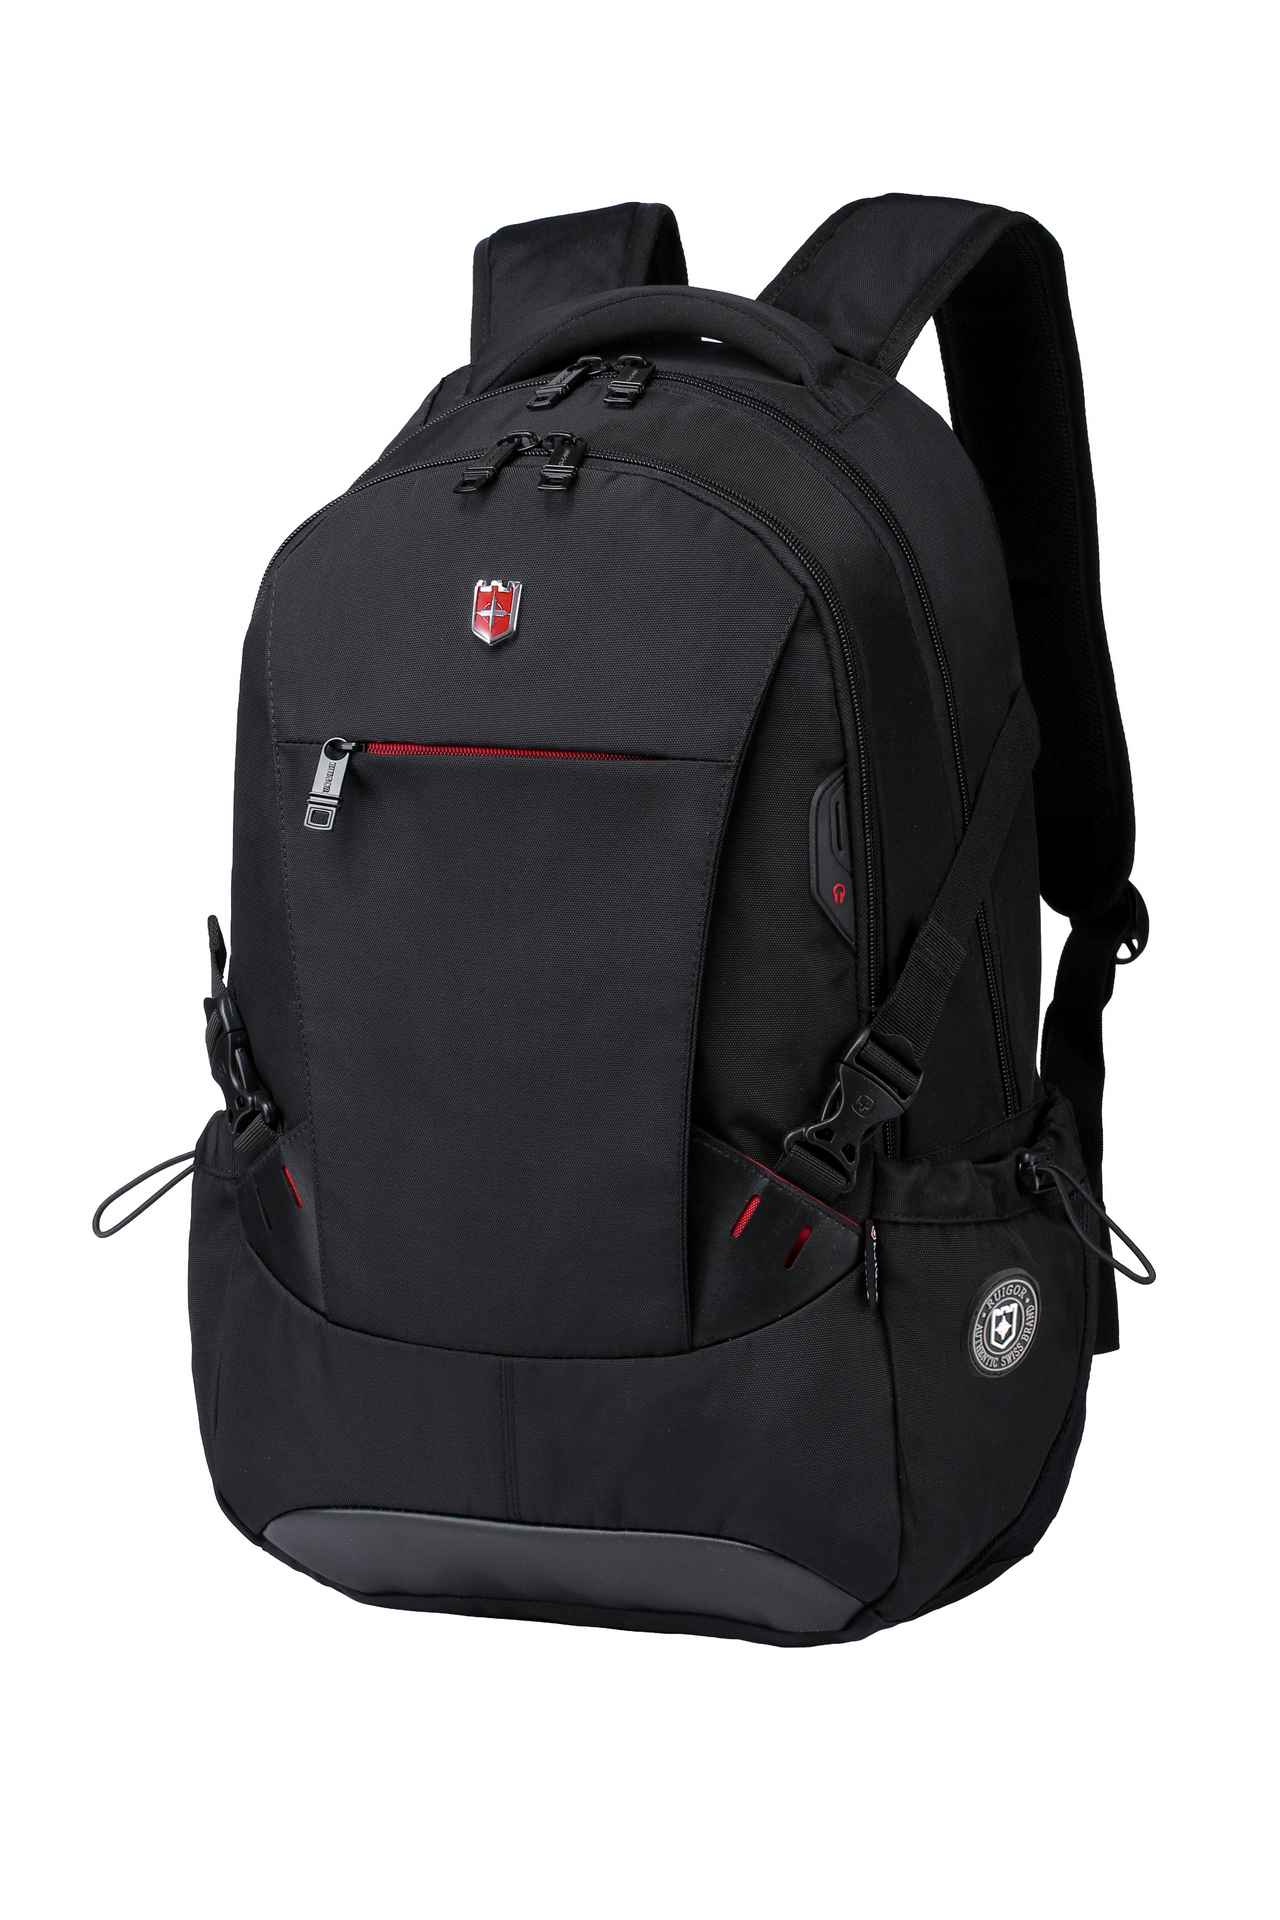 RUIGOR ICON 81 Laptop Backpack Black